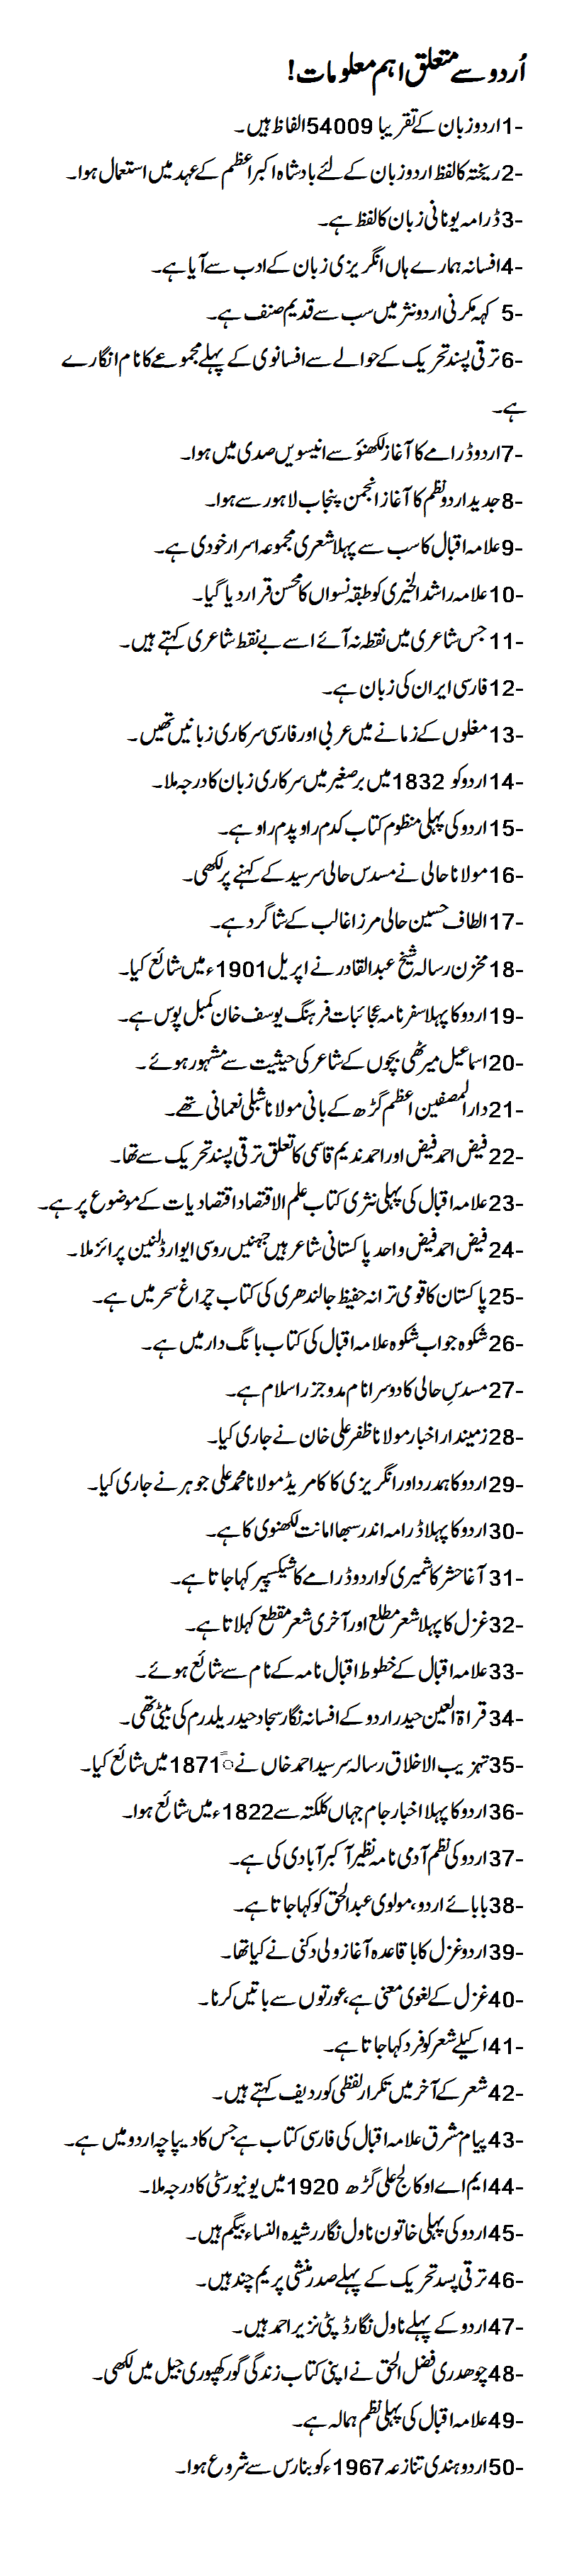 Important information about Urdu